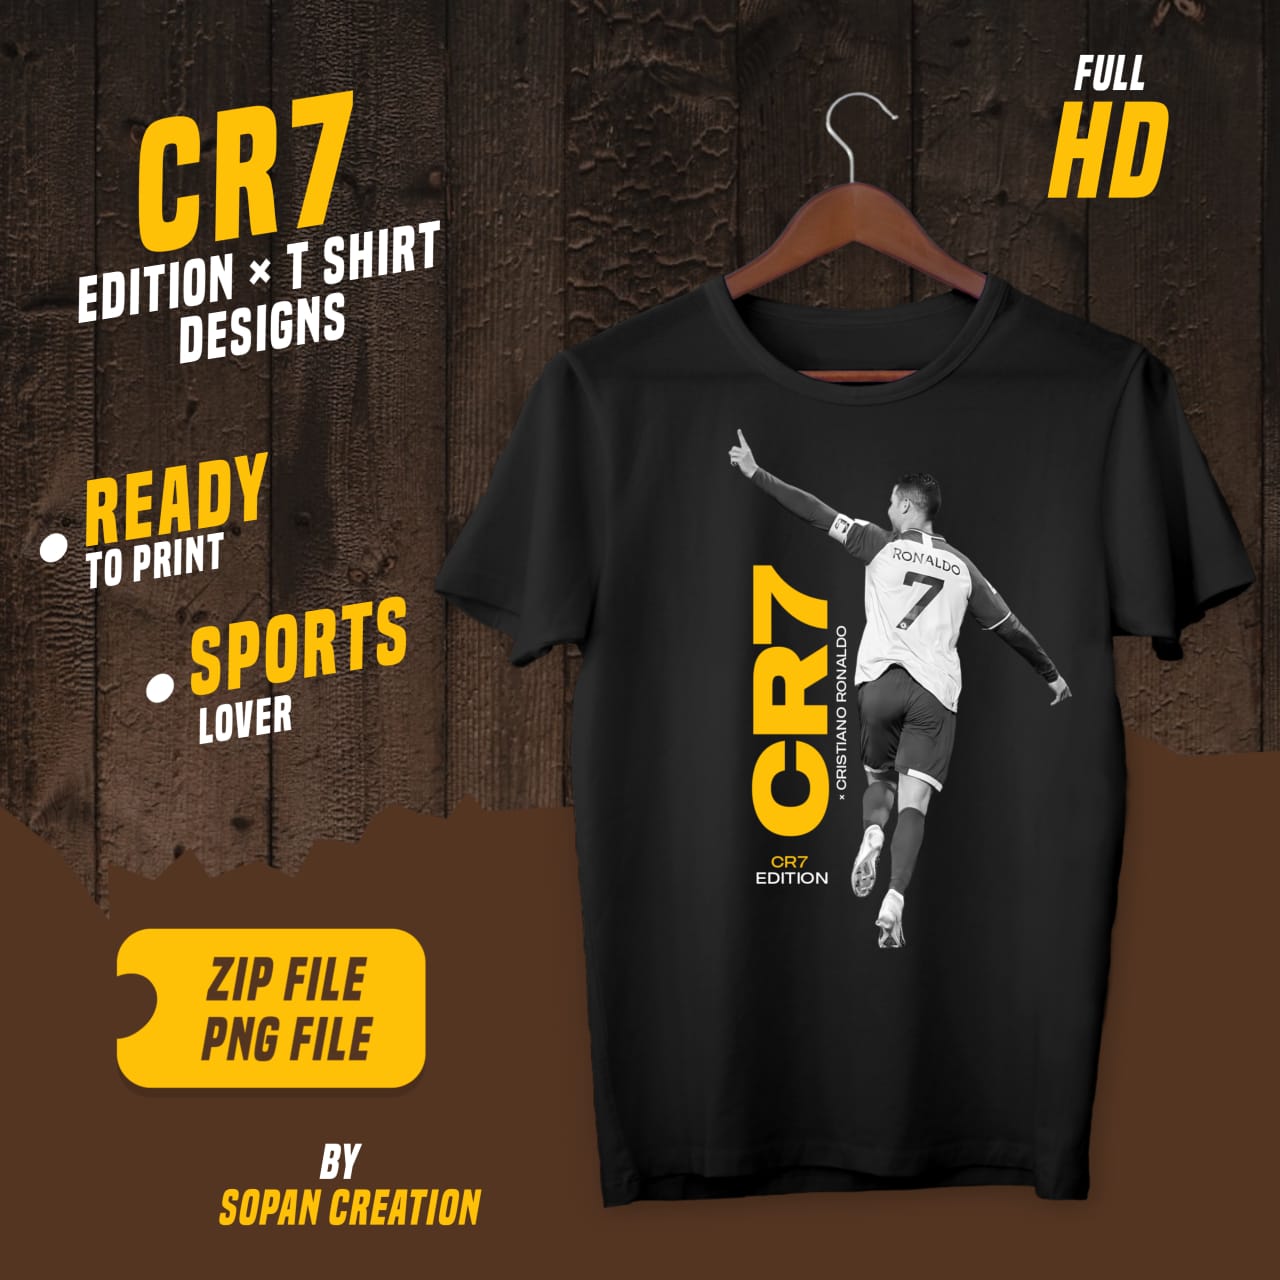 Udelukke smertestillende medicin ønske CR7 Edition ( Cristiano Ronaldo ) Special T- shirt Design | Sports Players T-  shirt - MasterBundles